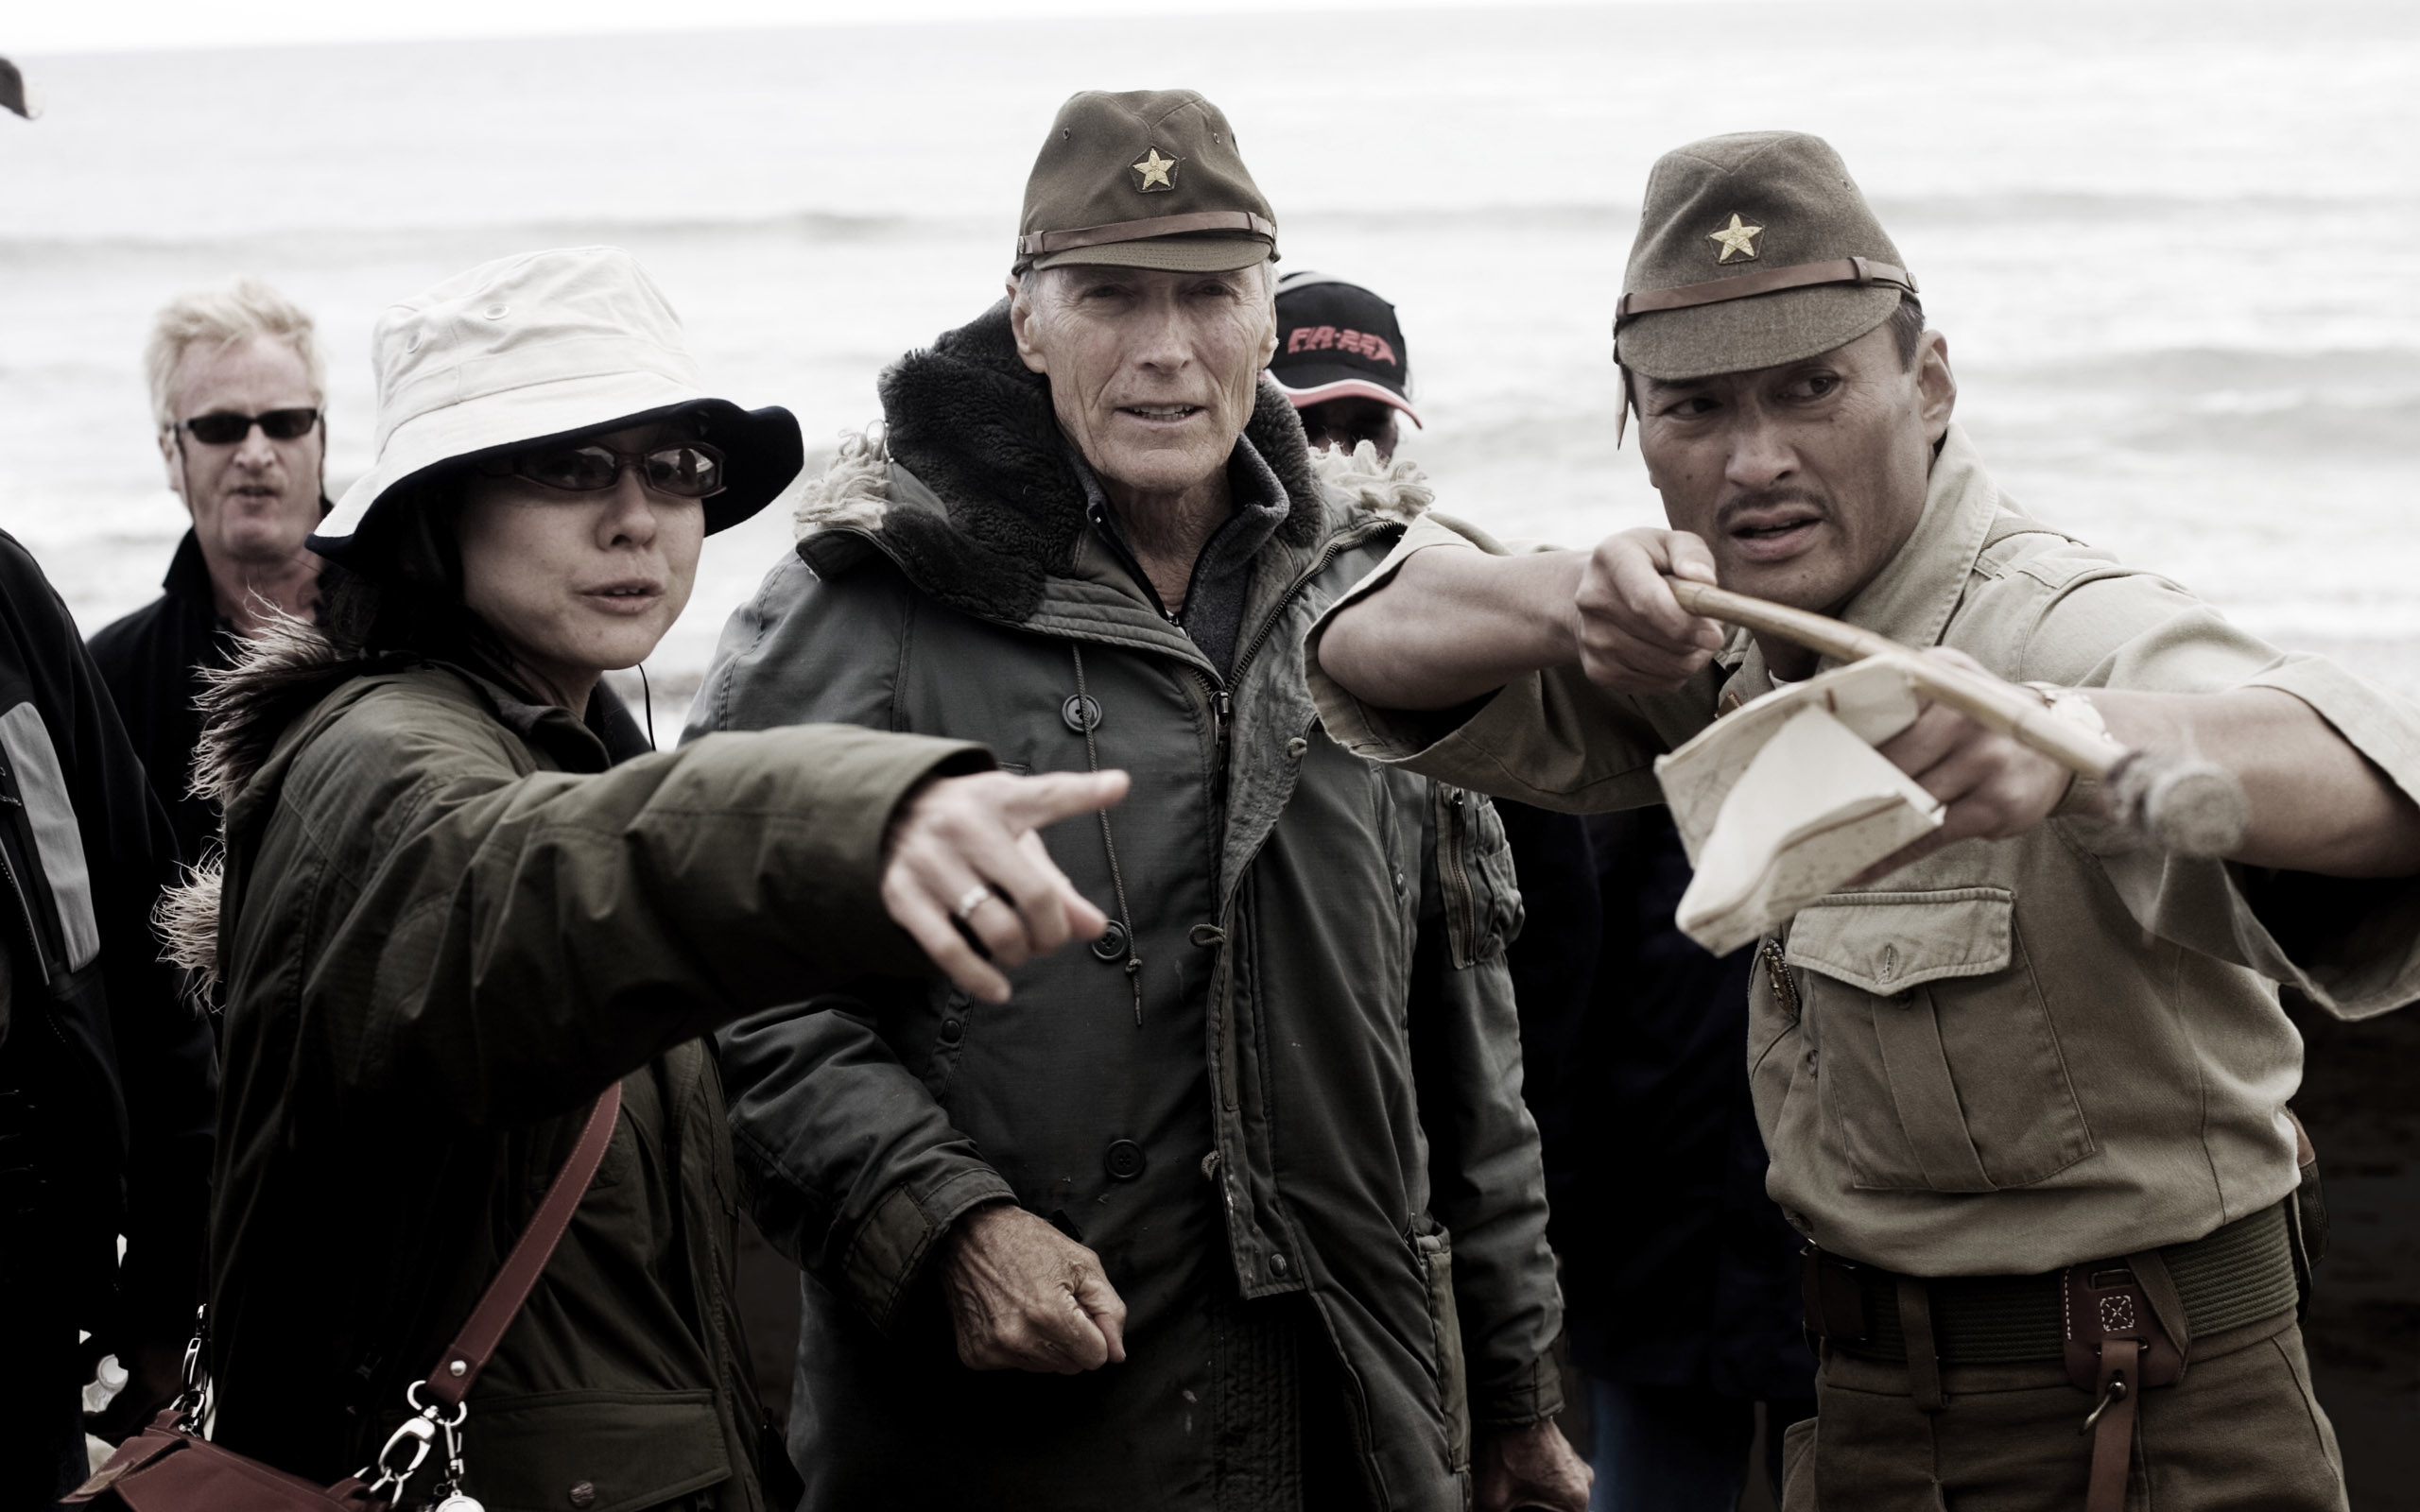 Letters from Iwo Jima, HD wallpapers, Emotional war film, Powerful performances, 2560x1600 HD Desktop